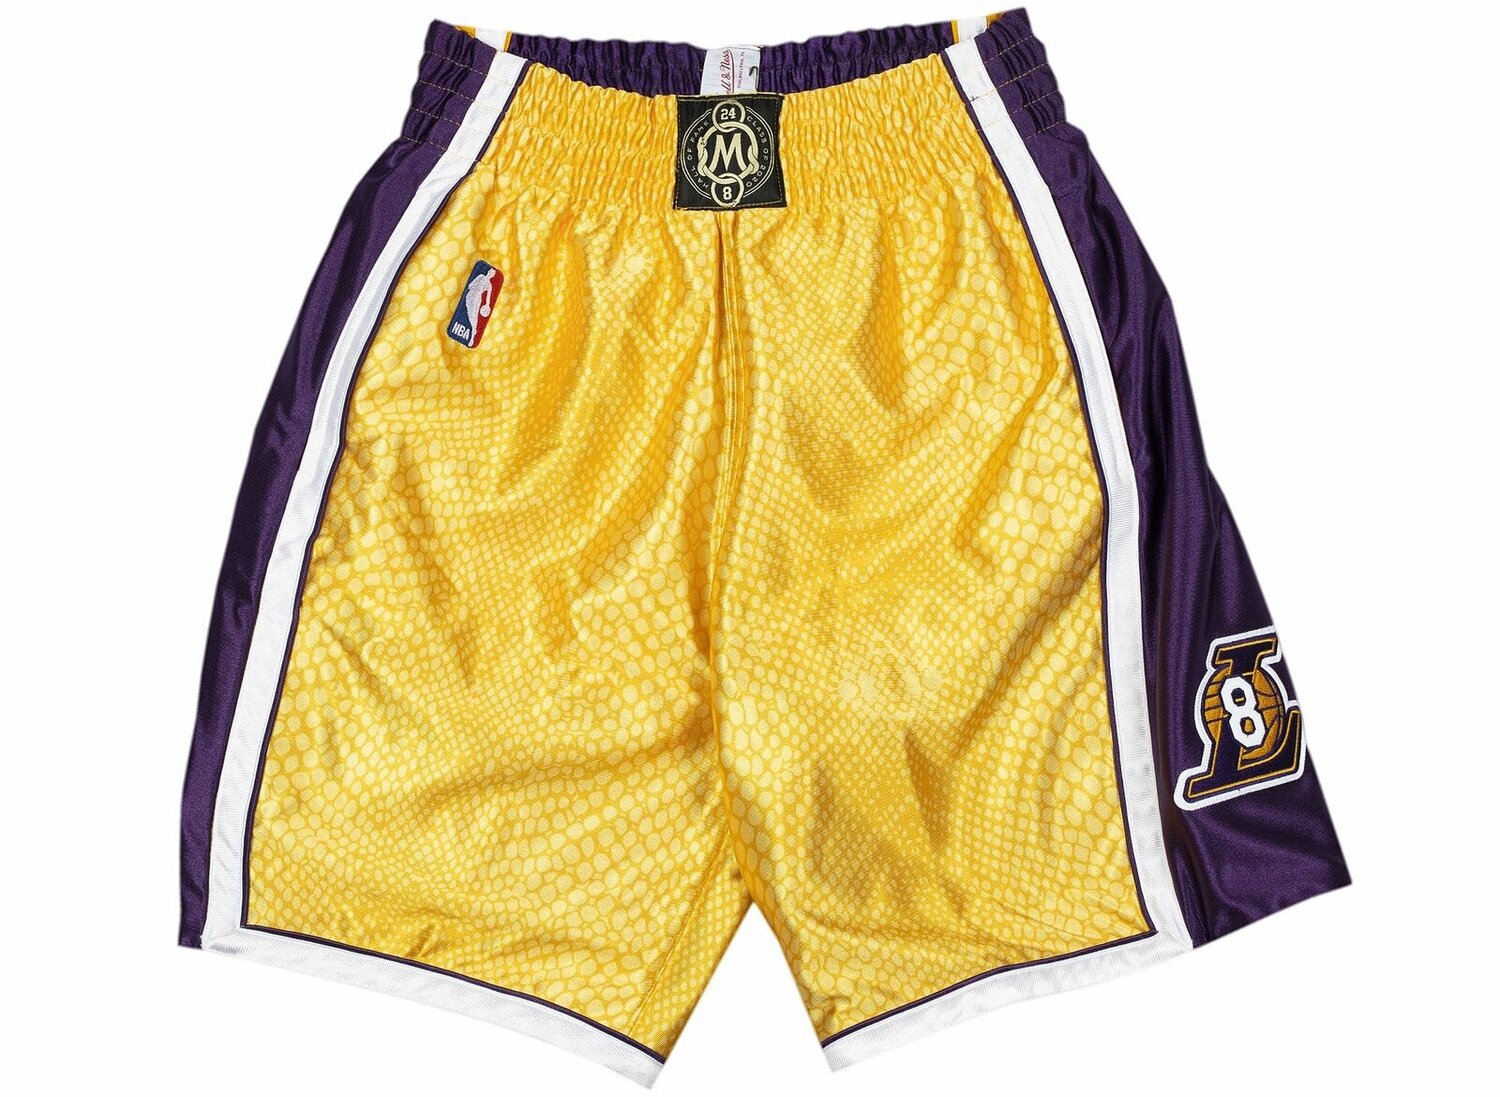 Los Angeles Lakers Kobe Bryant 2000-01 Authentic Jersey  AJY4SB19089-LALLGPR00KBR